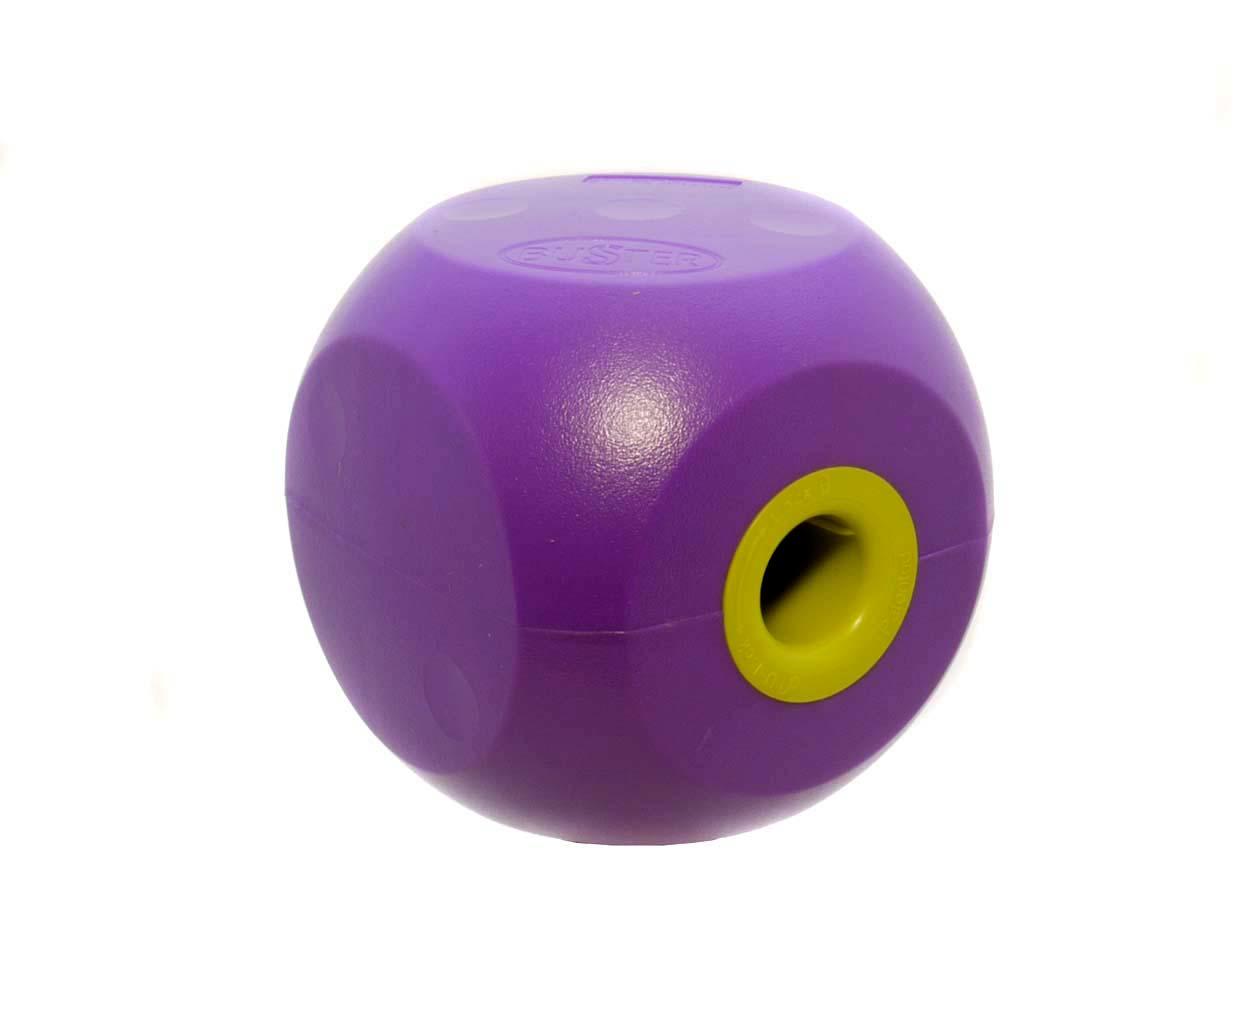 classic mini buster cube treat dog toy - purple